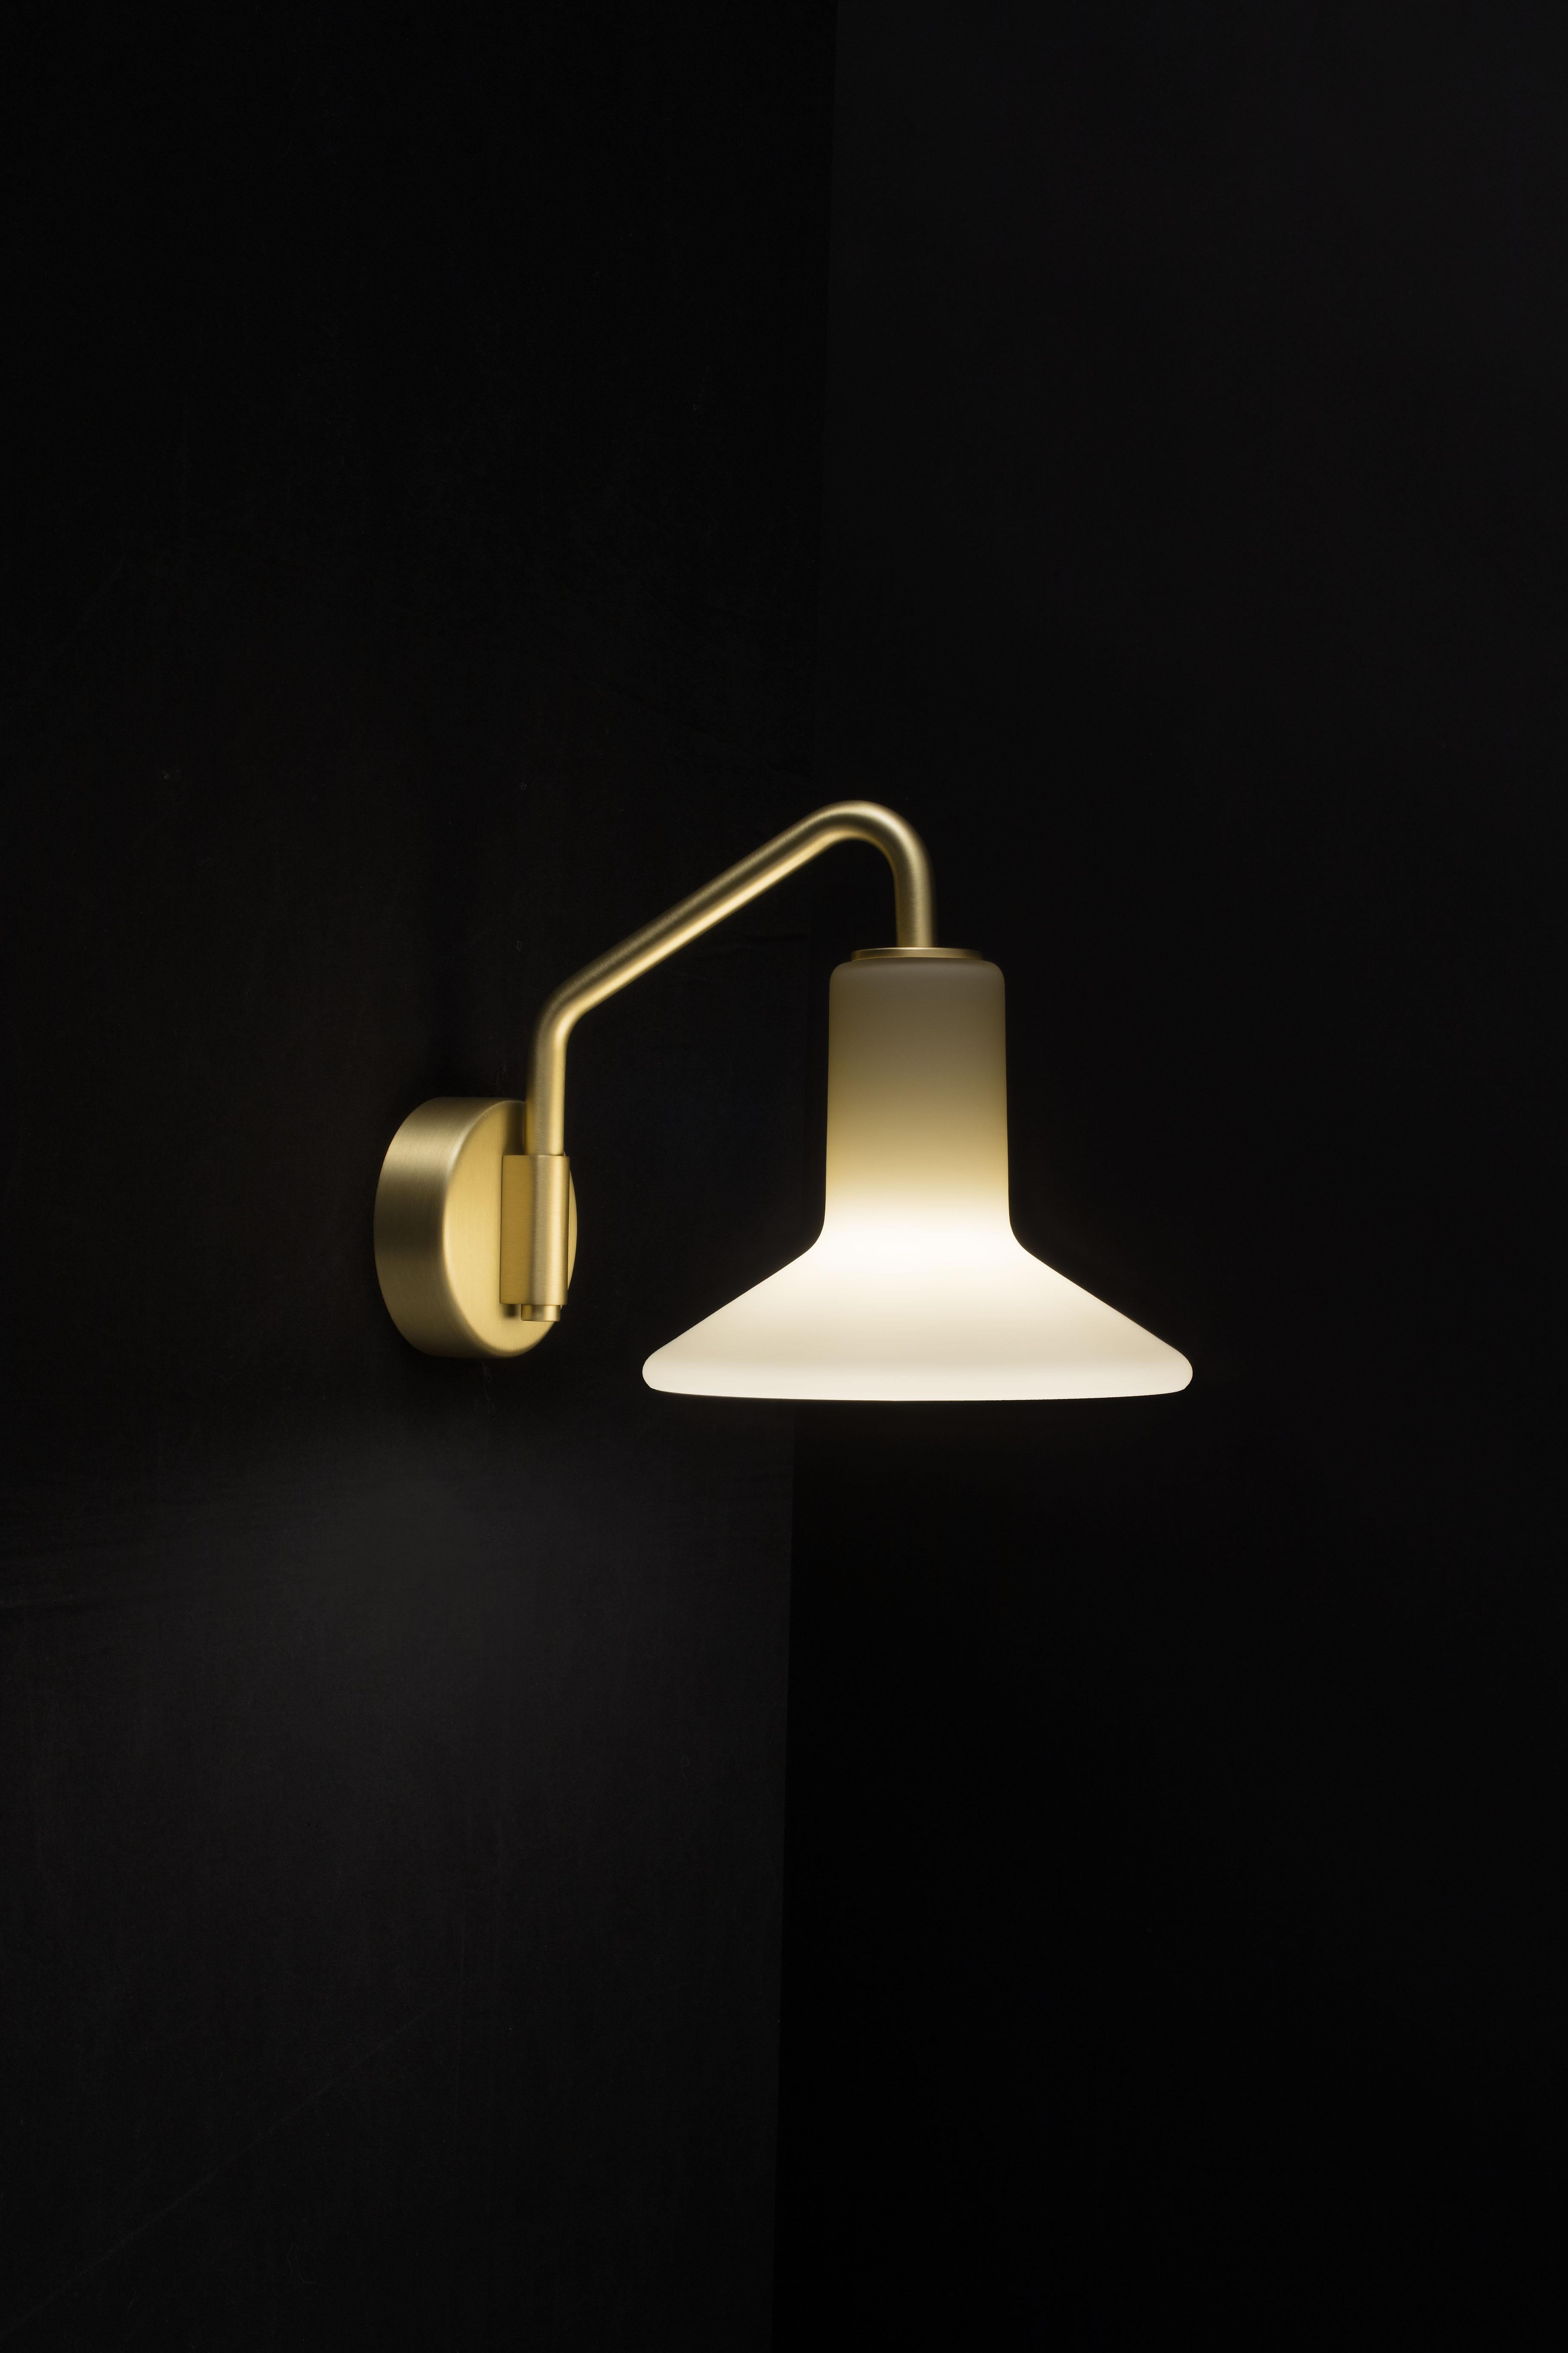 Mid-Century Modern Tato Italia Olly Applique Wall Light in Satin Brass